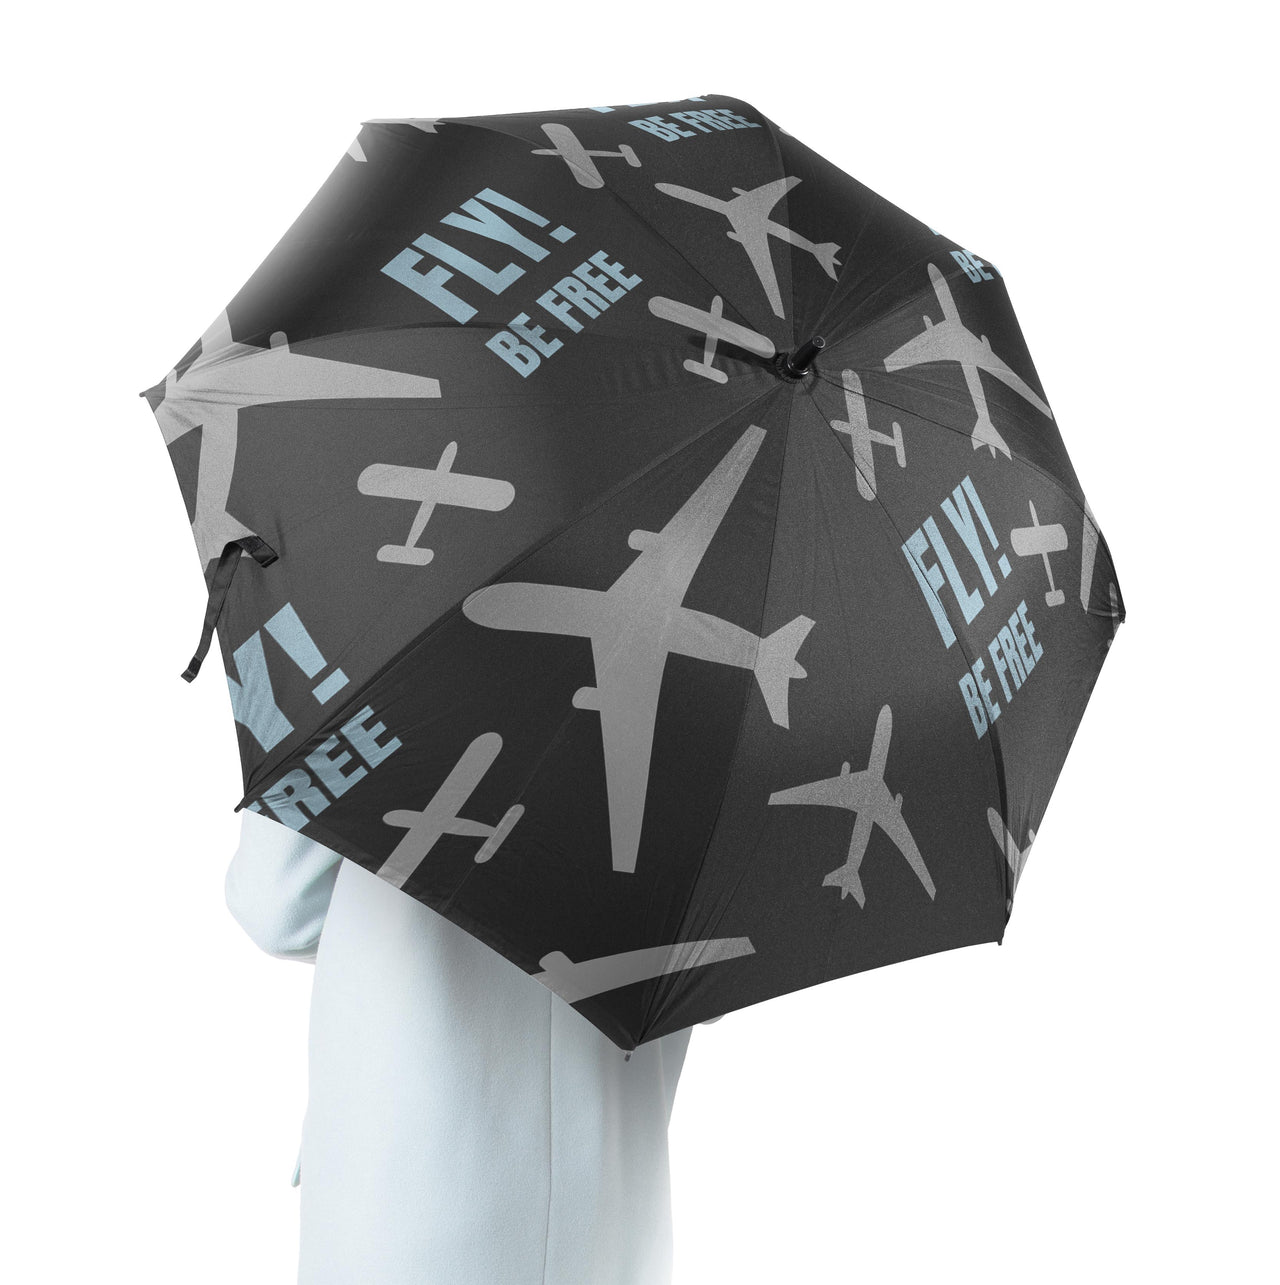 Fly Be Free Designed Umbrella